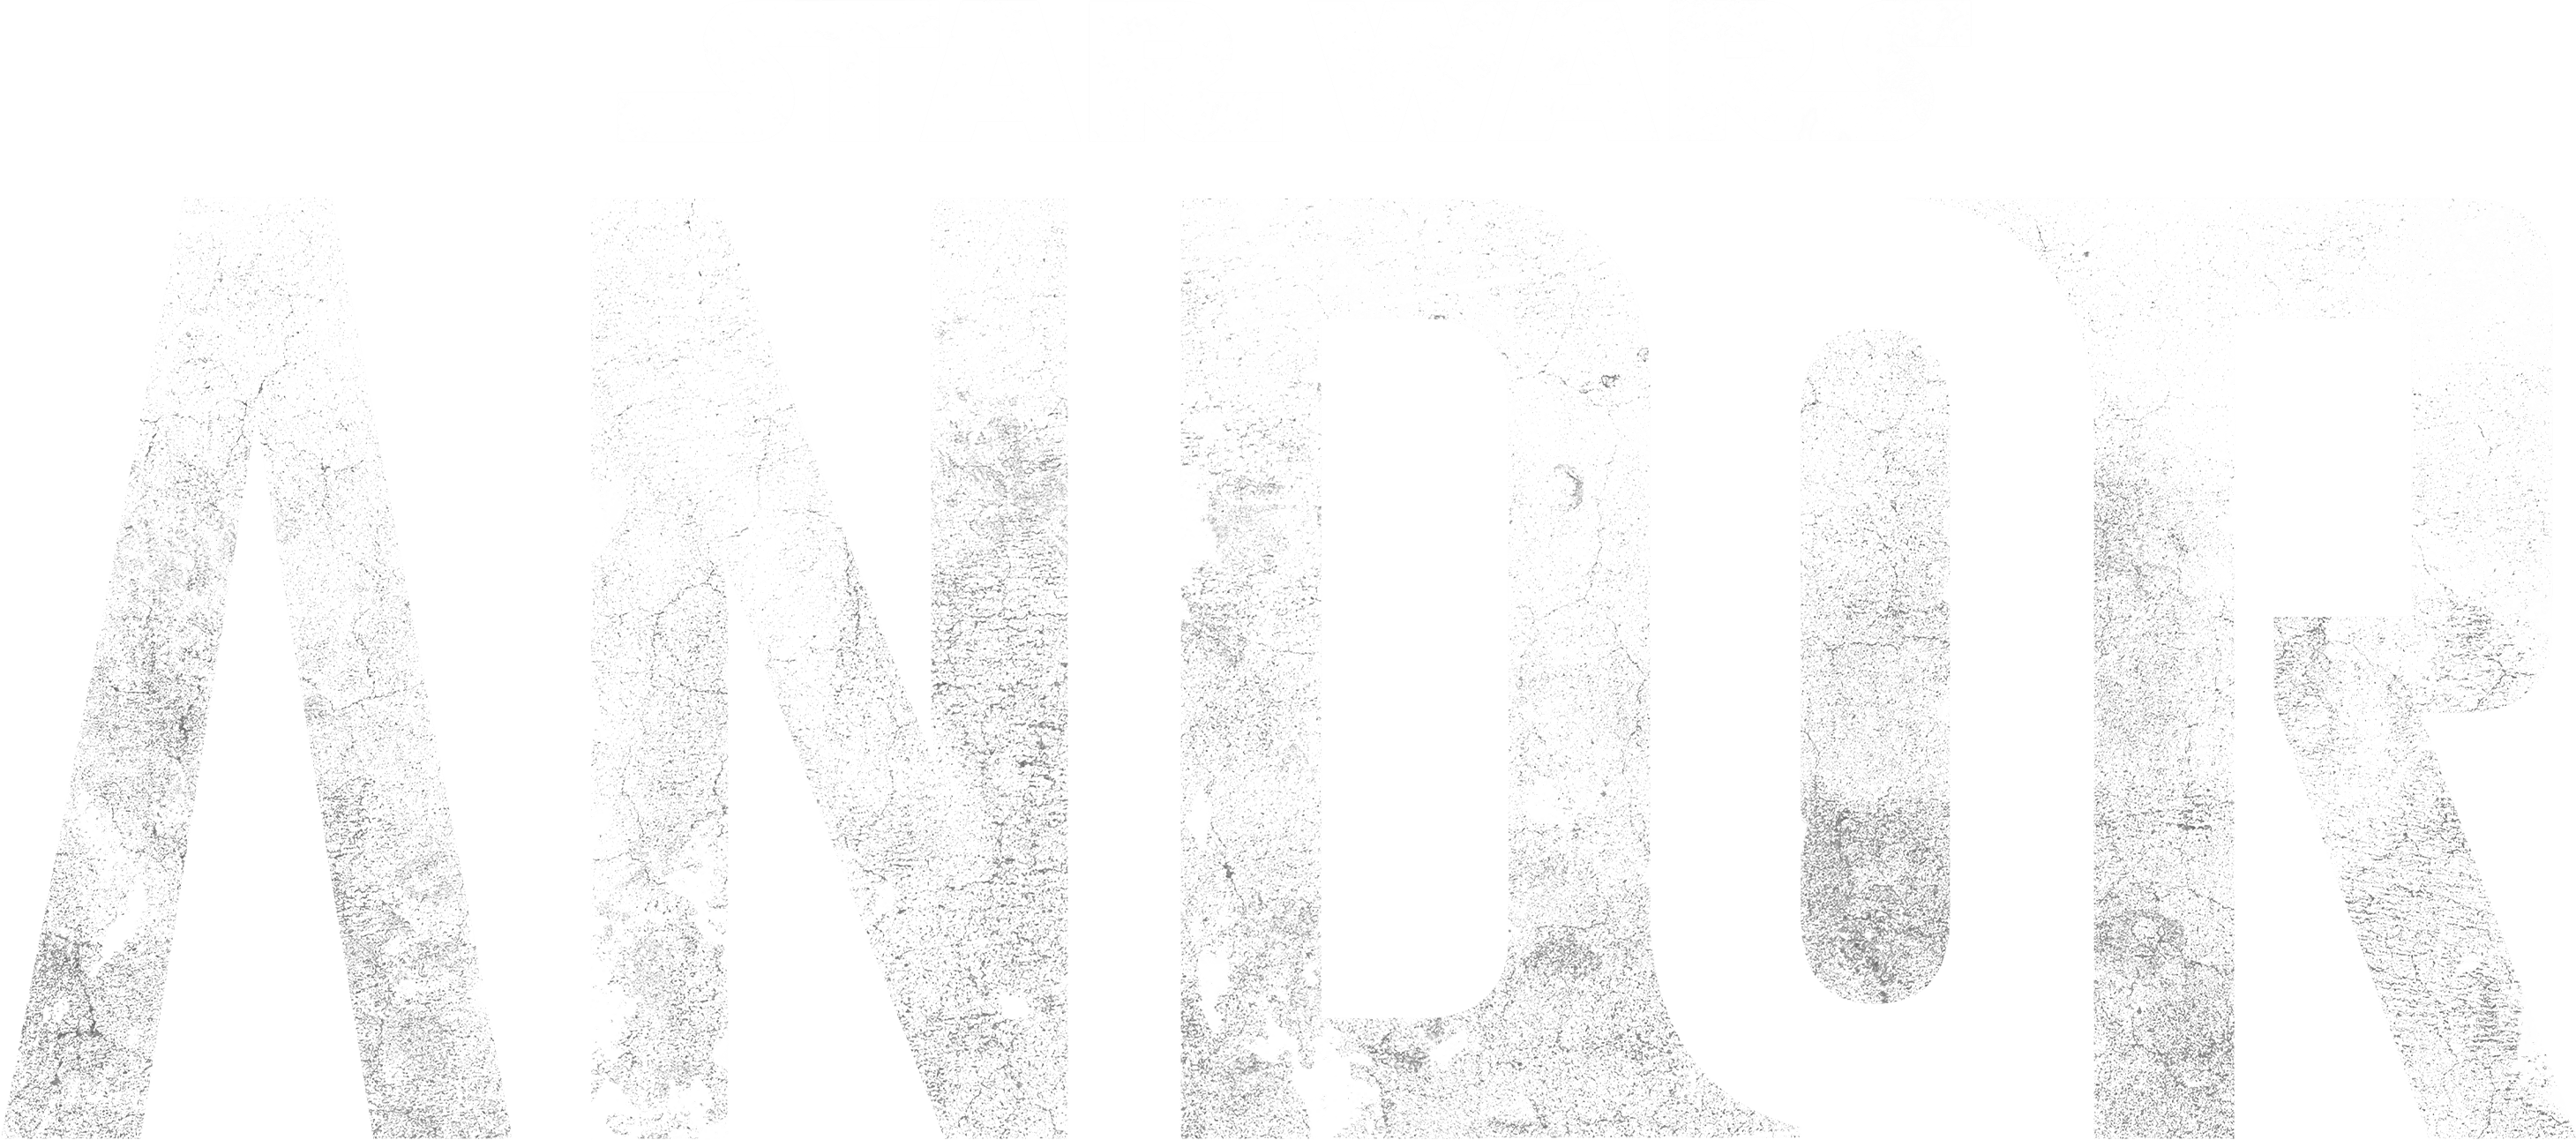 Star Wars: Andor logo